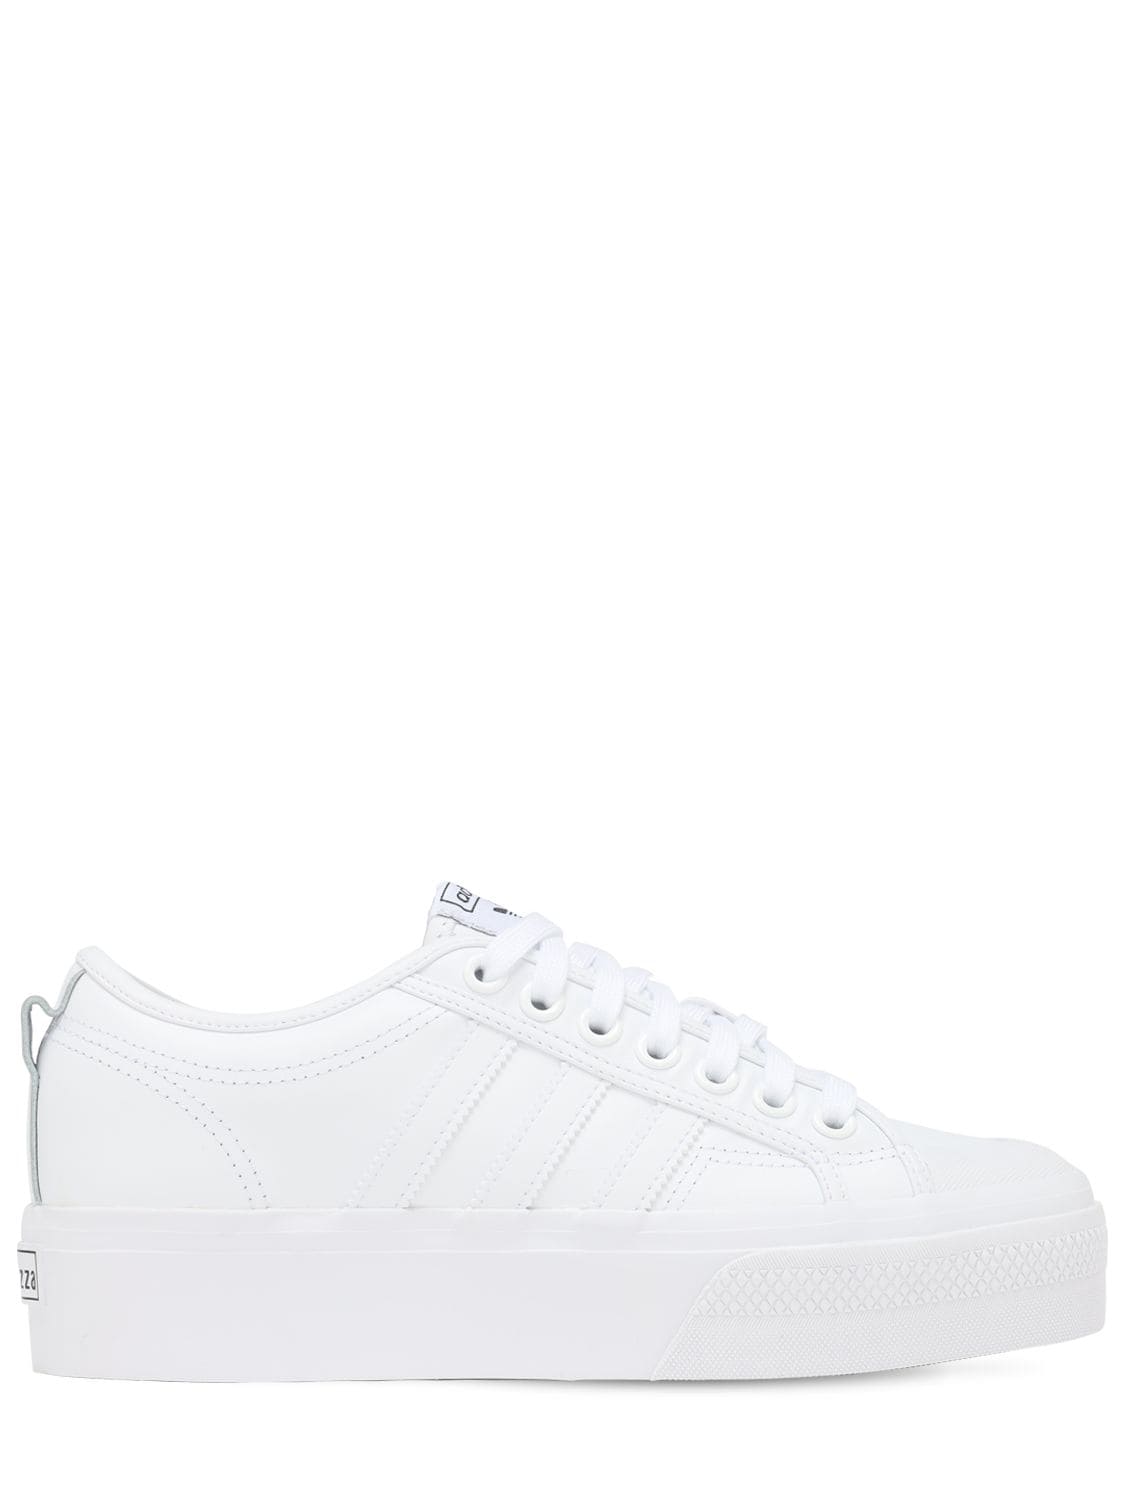 adidas originals white leather nizza platform trainers